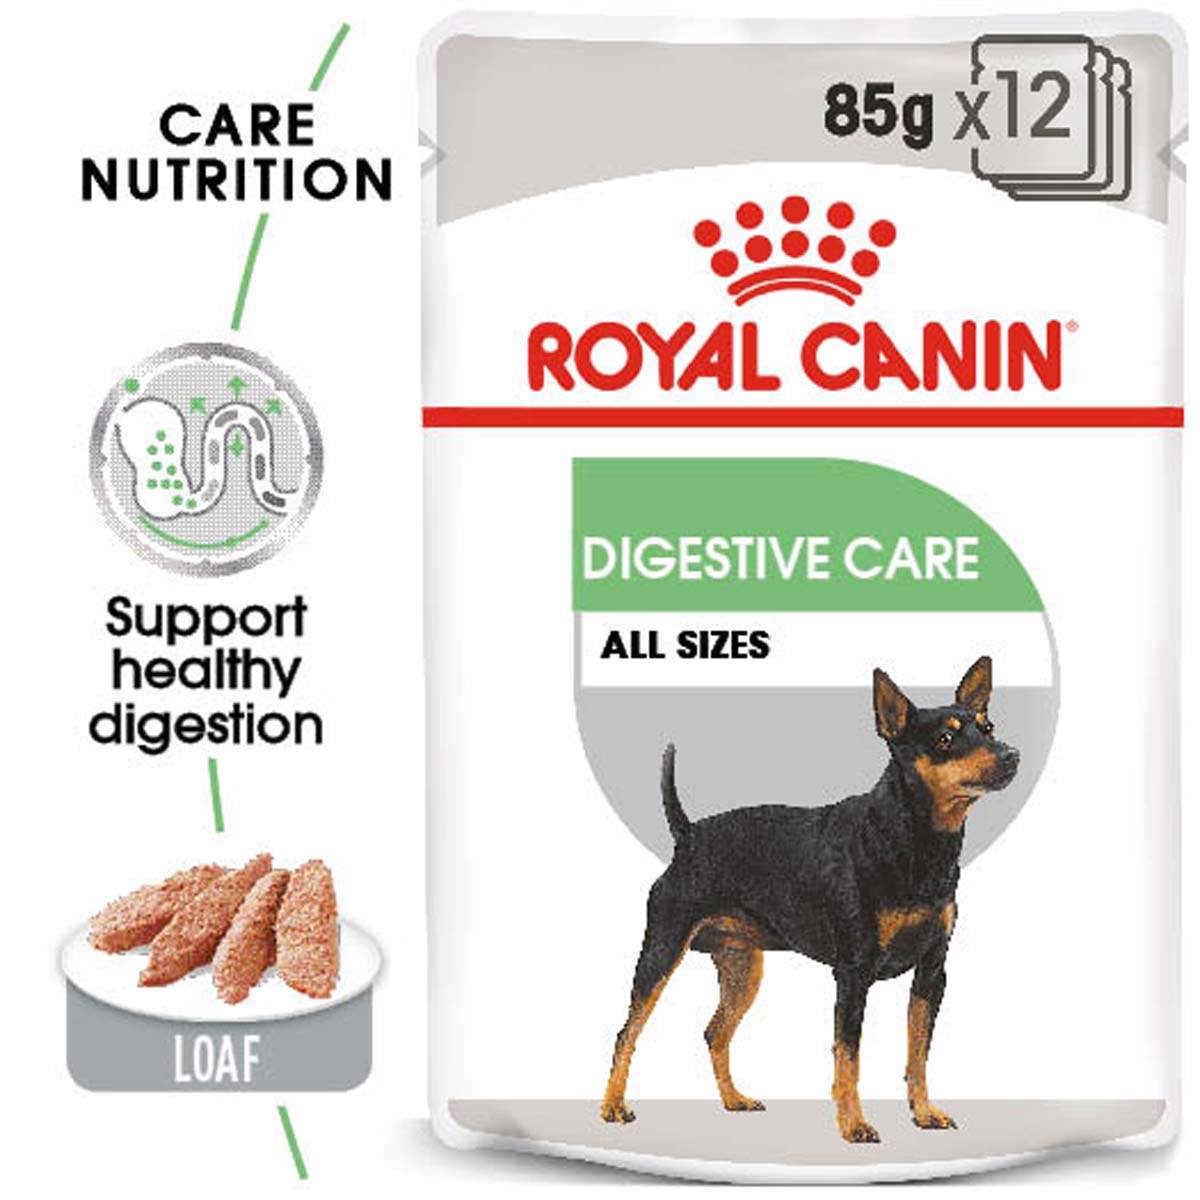 Влажный корм для собак royal canin. Корм Royal Canin Digestive Care. Роял Канин Дайджестив для собак. Royal Canin Digestive Care для собак влажный корм. Роял Канин влажный корм для собак паучи.